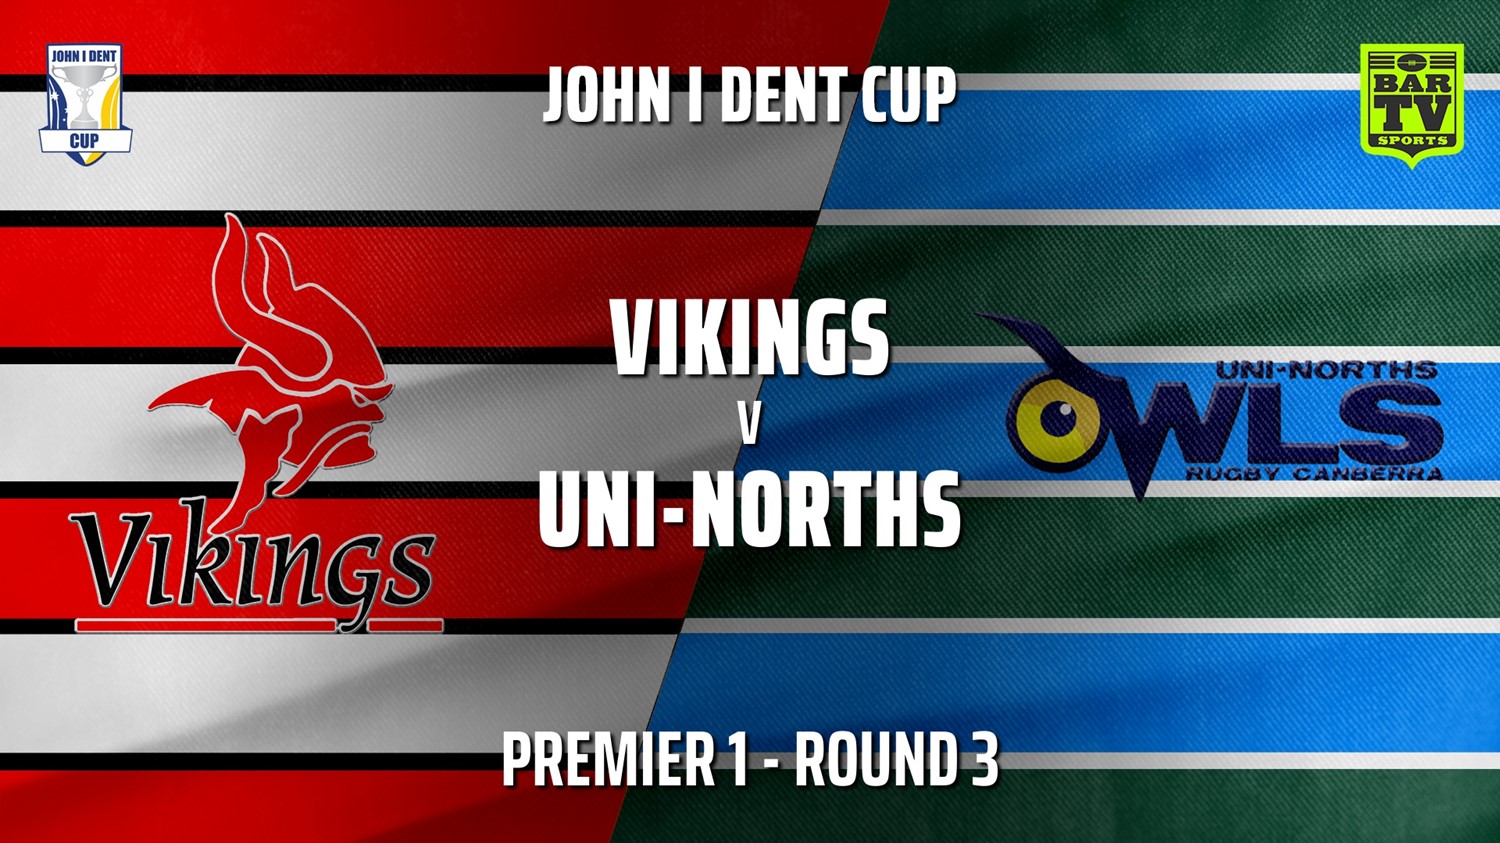 210501-John I Dent Round 3 - Premier 1 - Tuggeranong Vikings v UNI-Norths Minigame Slate Image